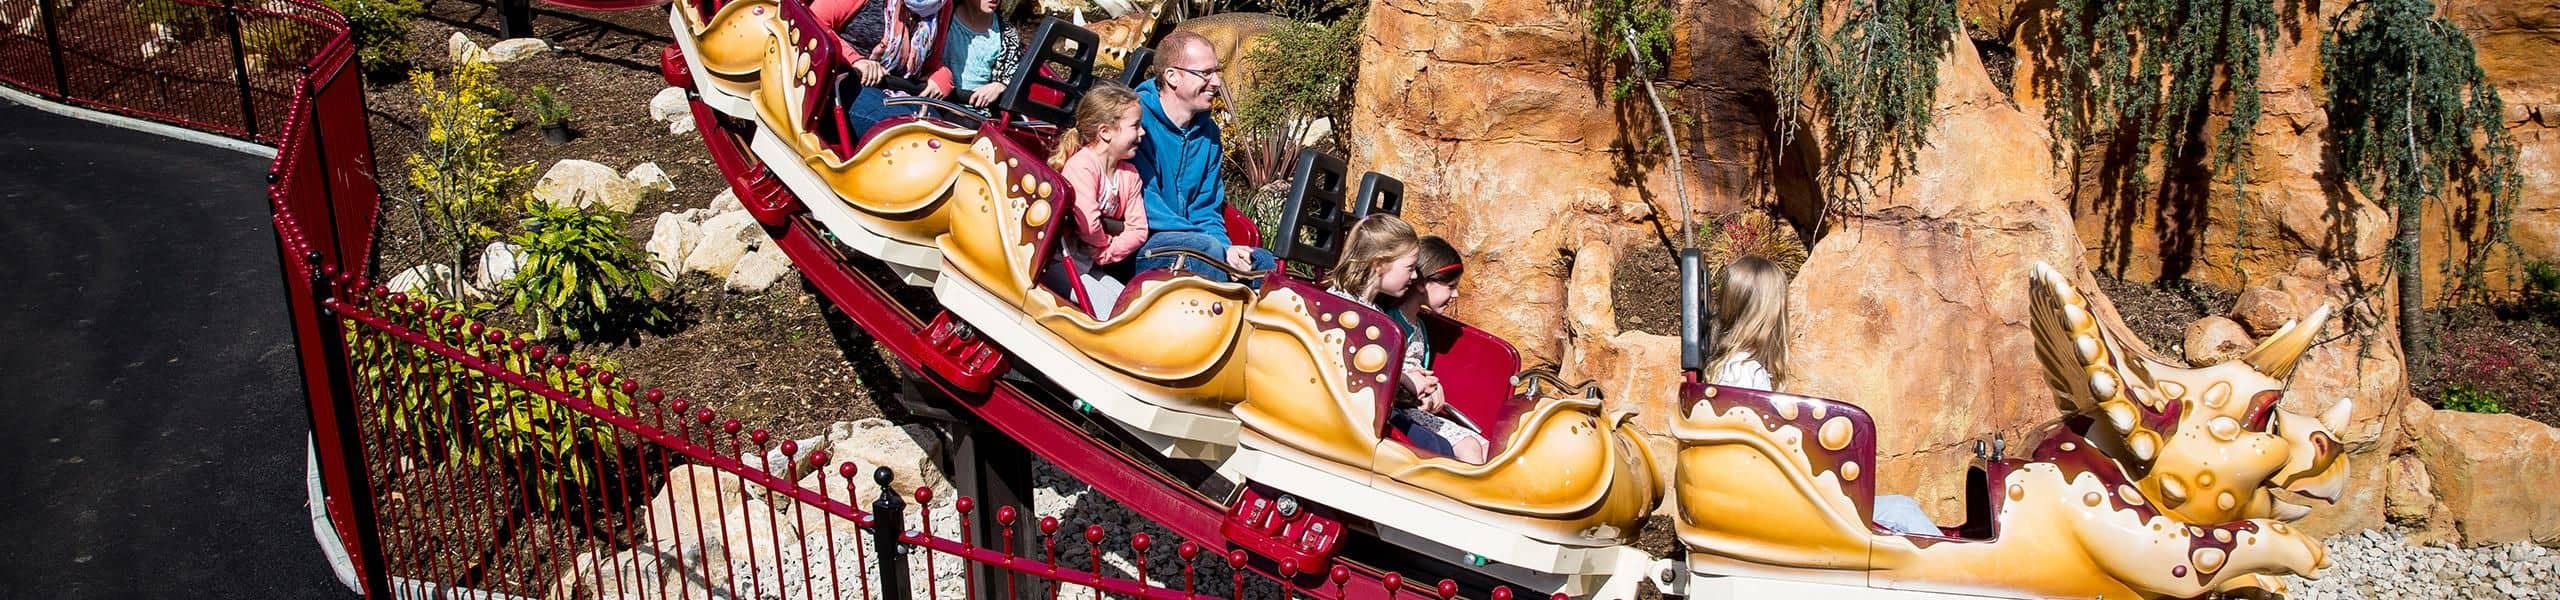 Dino Chase Family Roller Coaster| Paultons Park